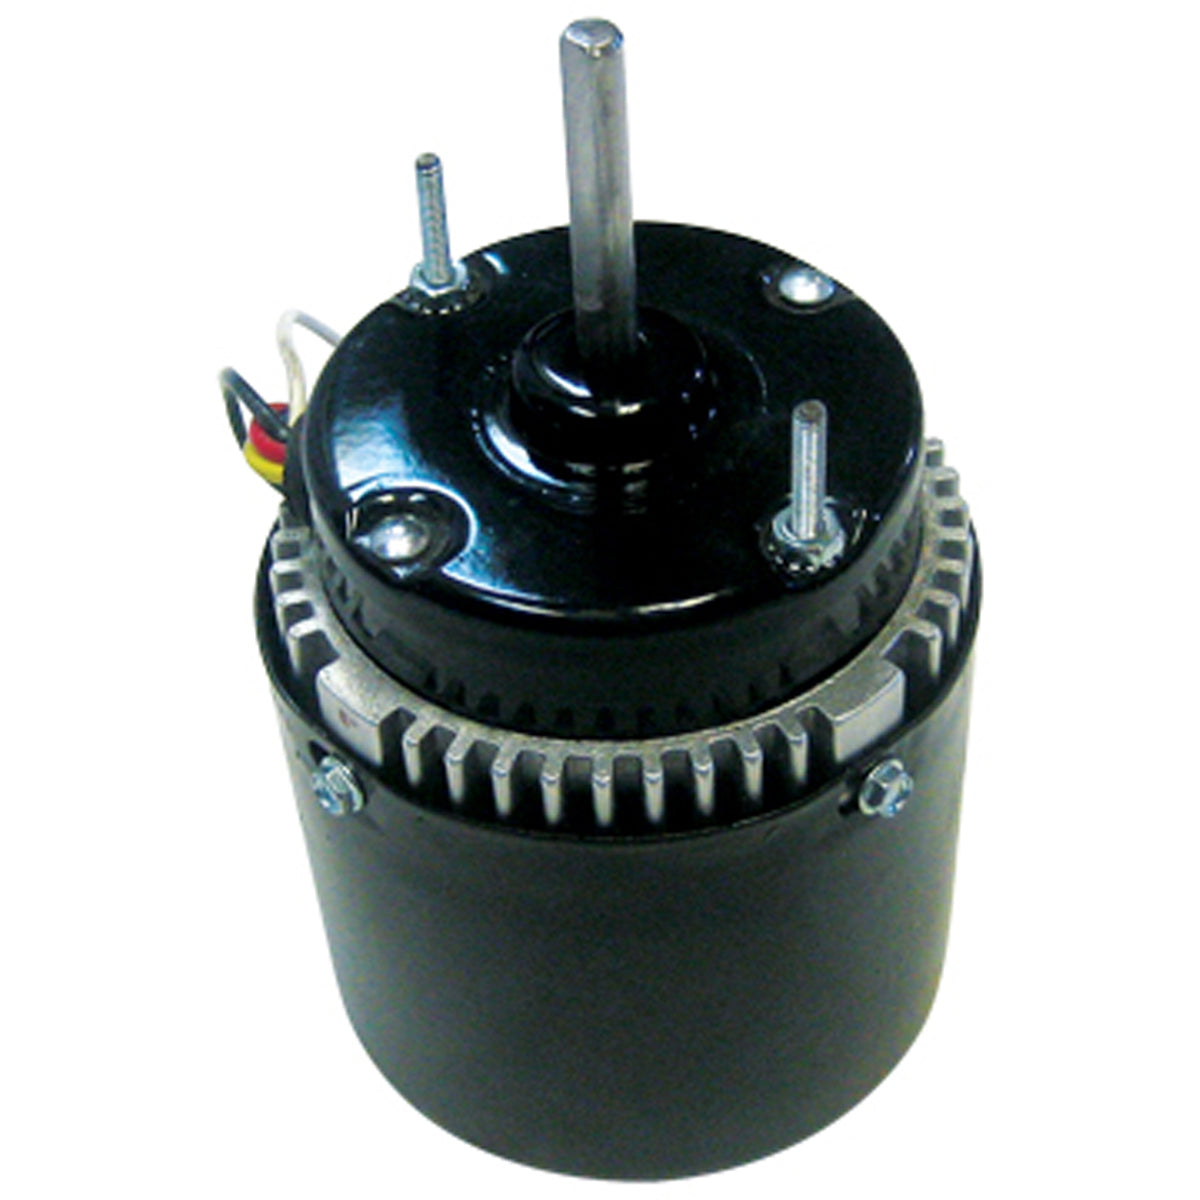 Product Image:Trimpro Bottom Motor for Original / Rotor